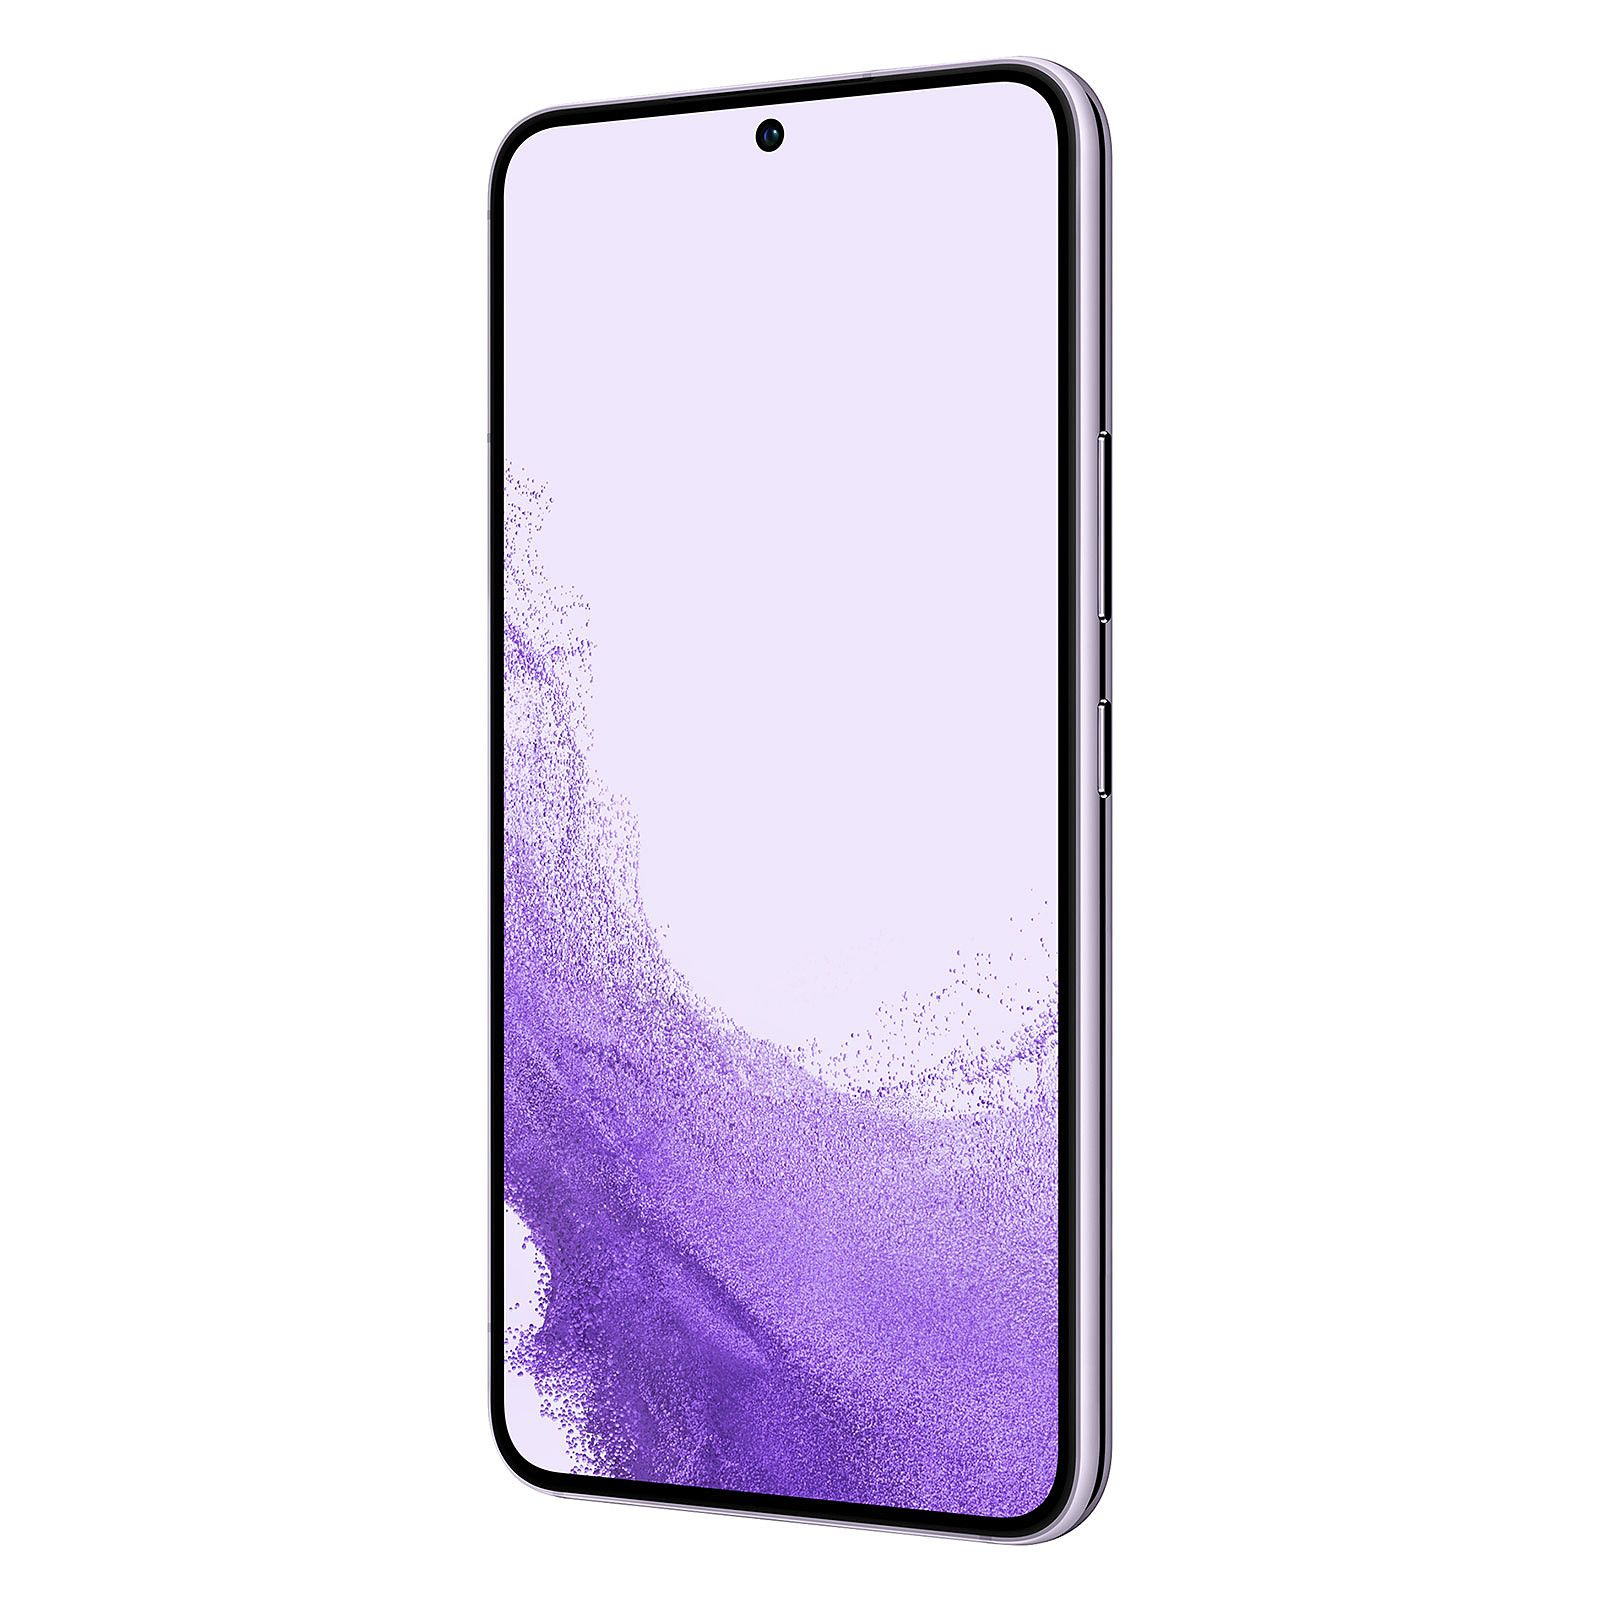 SAMSUNG REFURBISHED (*) Galaxy S22 Dual violett SIM (dual sim) GB 128 128 GB